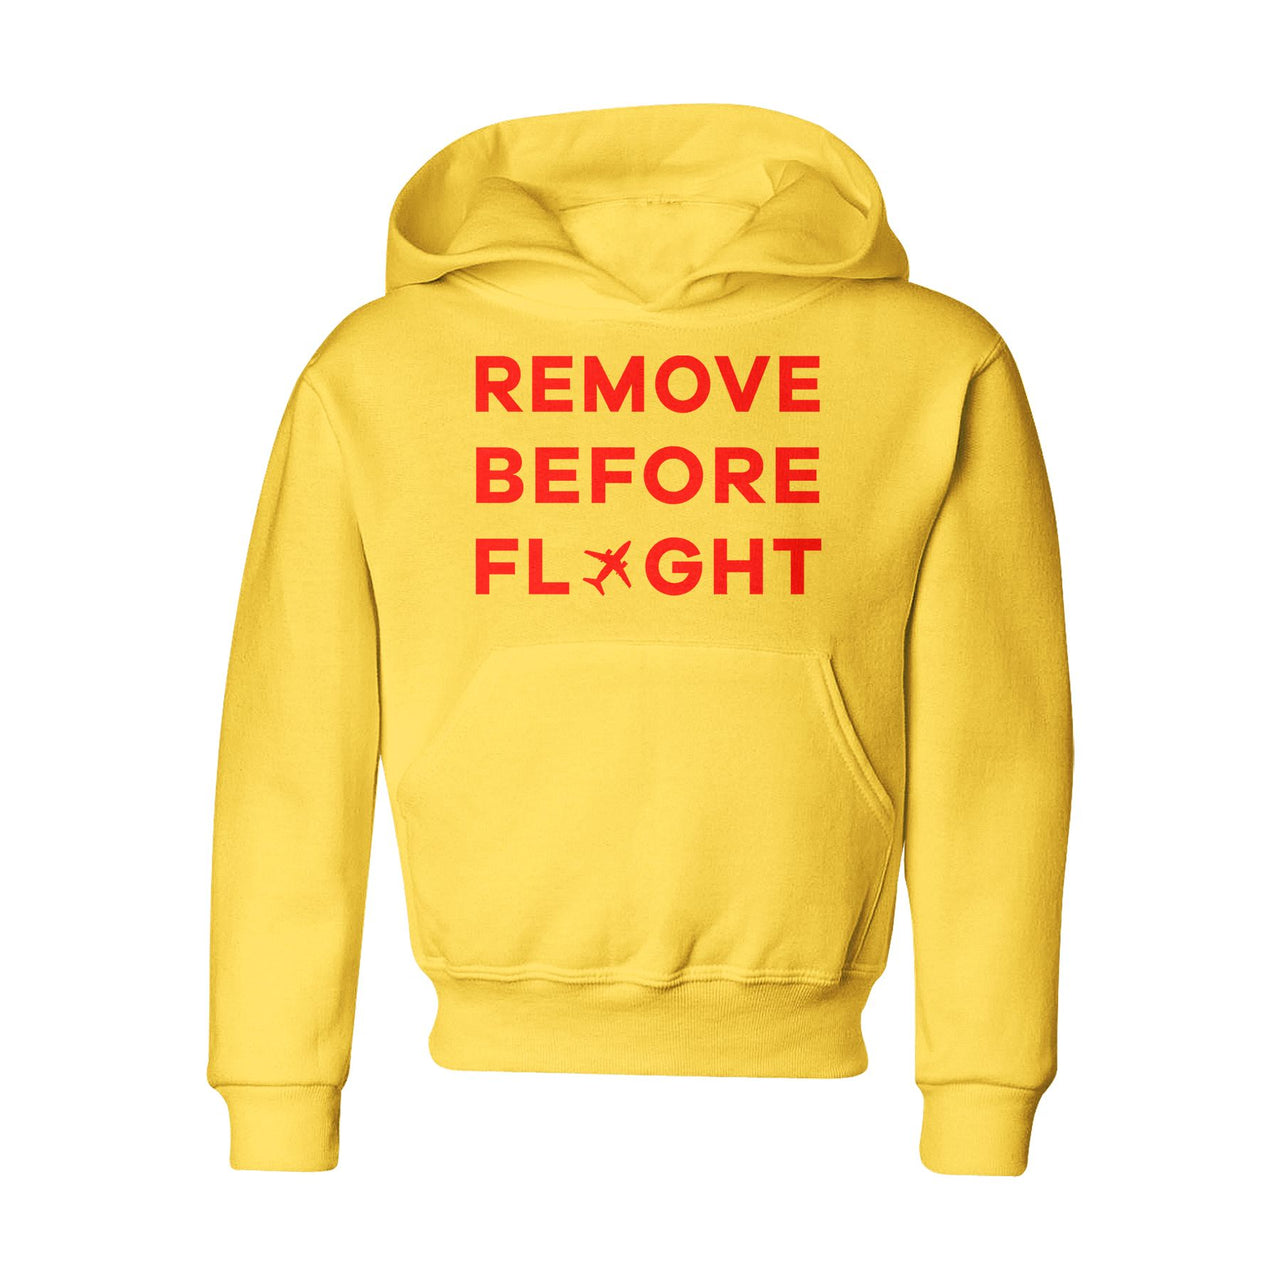 Remove Before Flight Designed "CHILDREN" Hoodies